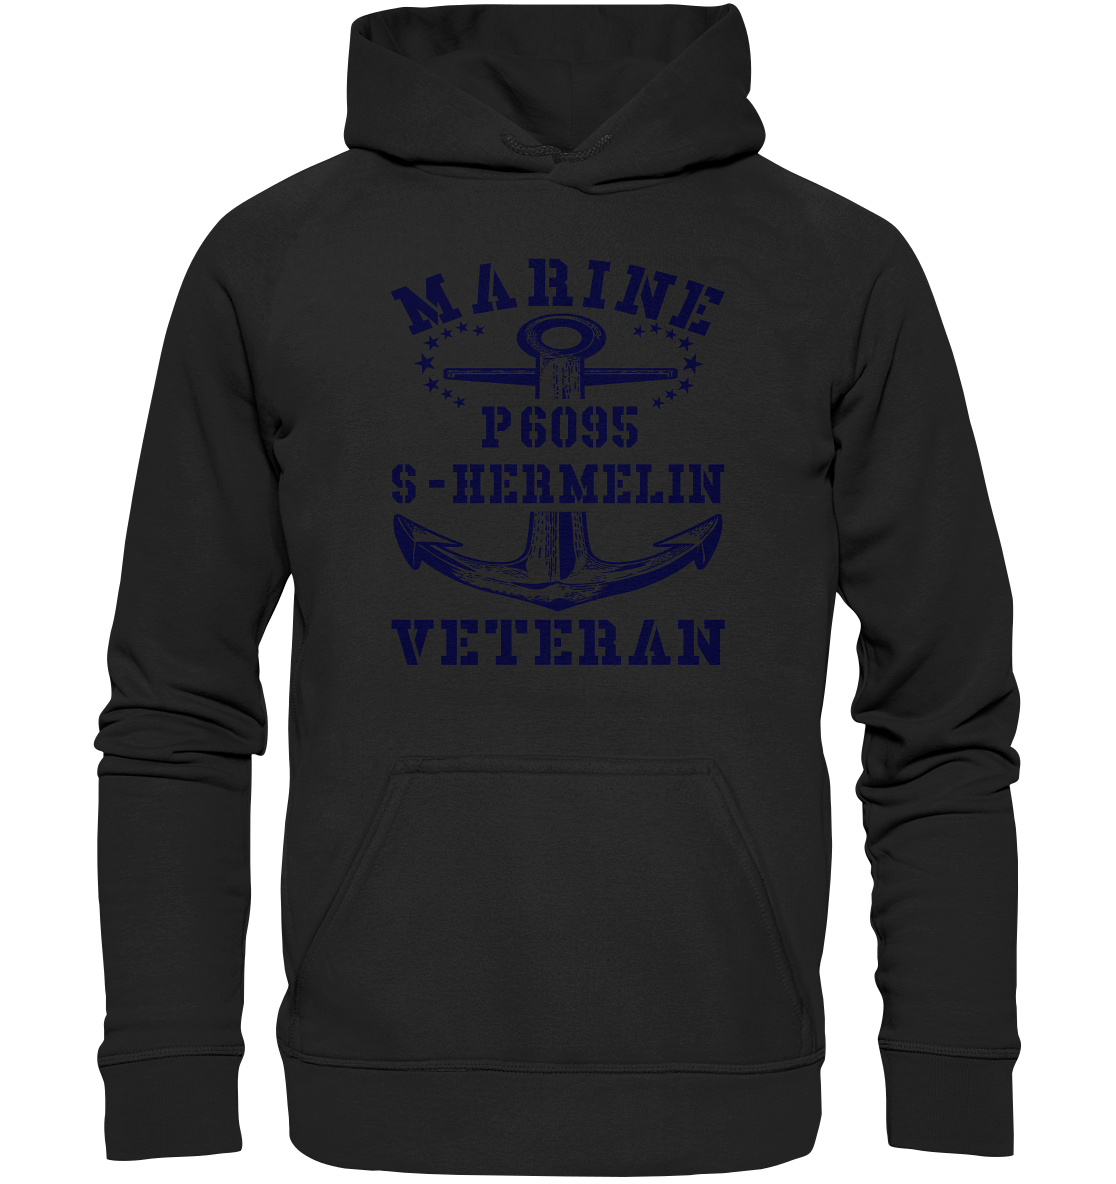 P6095 S-HERMELIN Marine Veteran - Basic Unisex Hoodie